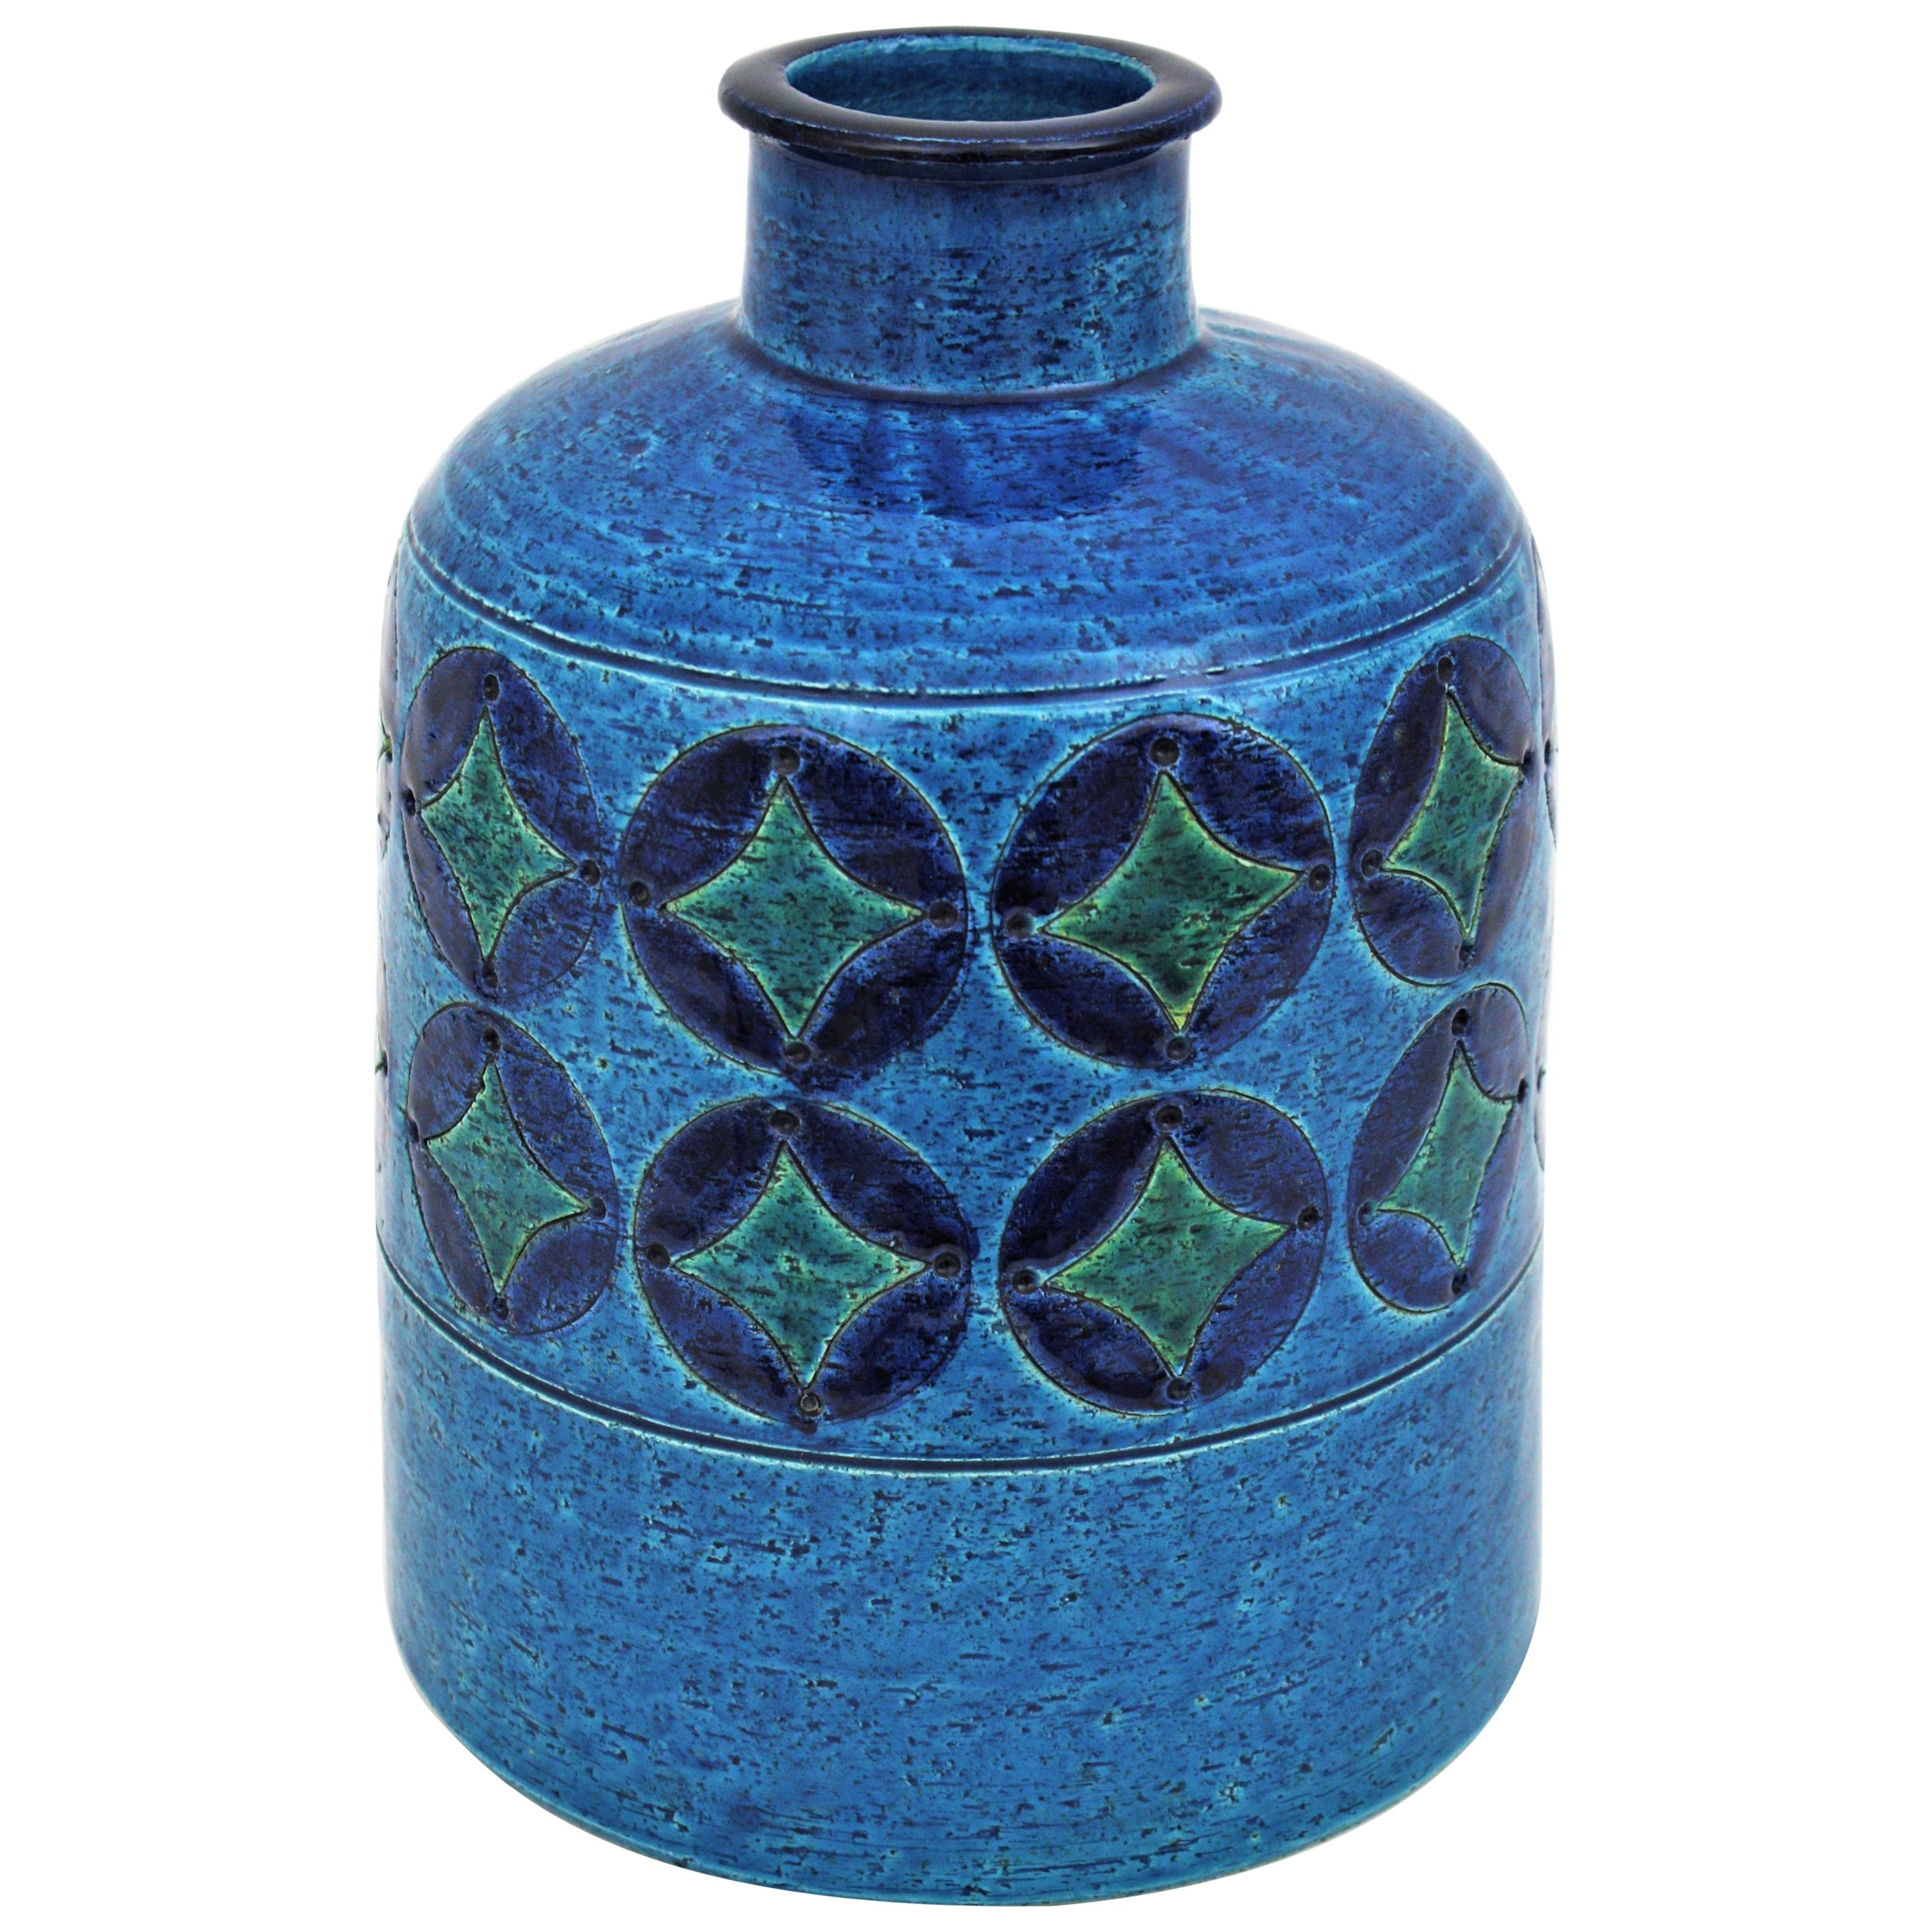 Bitossi Aldo Londi Blue Ceramic Large Bottle Vase with Circles & Rhombus Motif For Sale